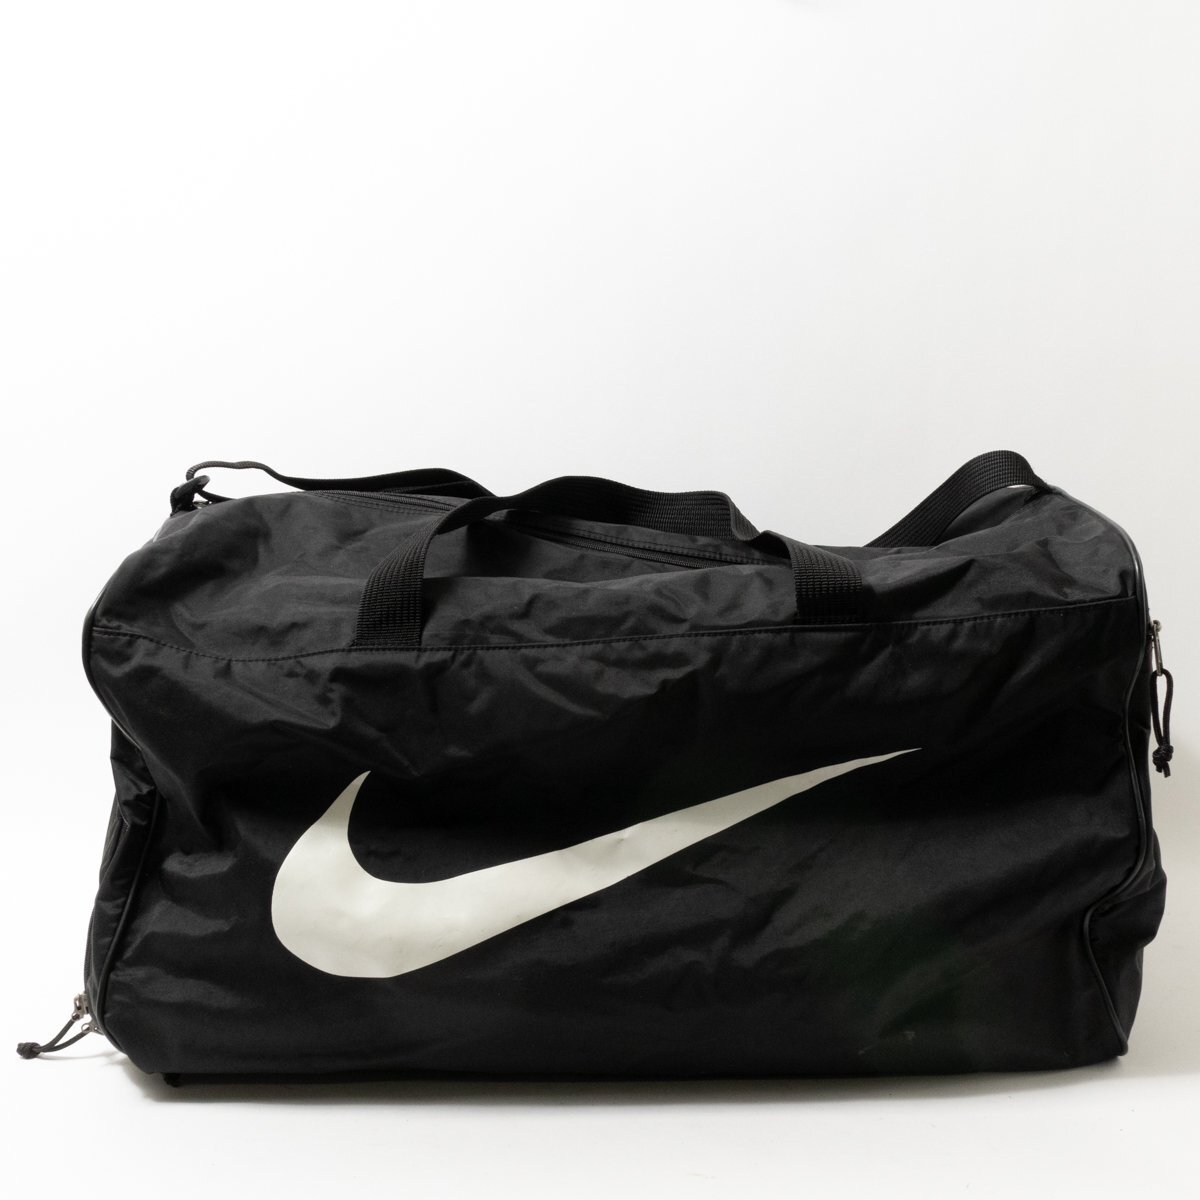 NIKE Nike Boston bag shoulder bag nylon black black series high capacity sport Jim part . active man and woman use men's lady's 